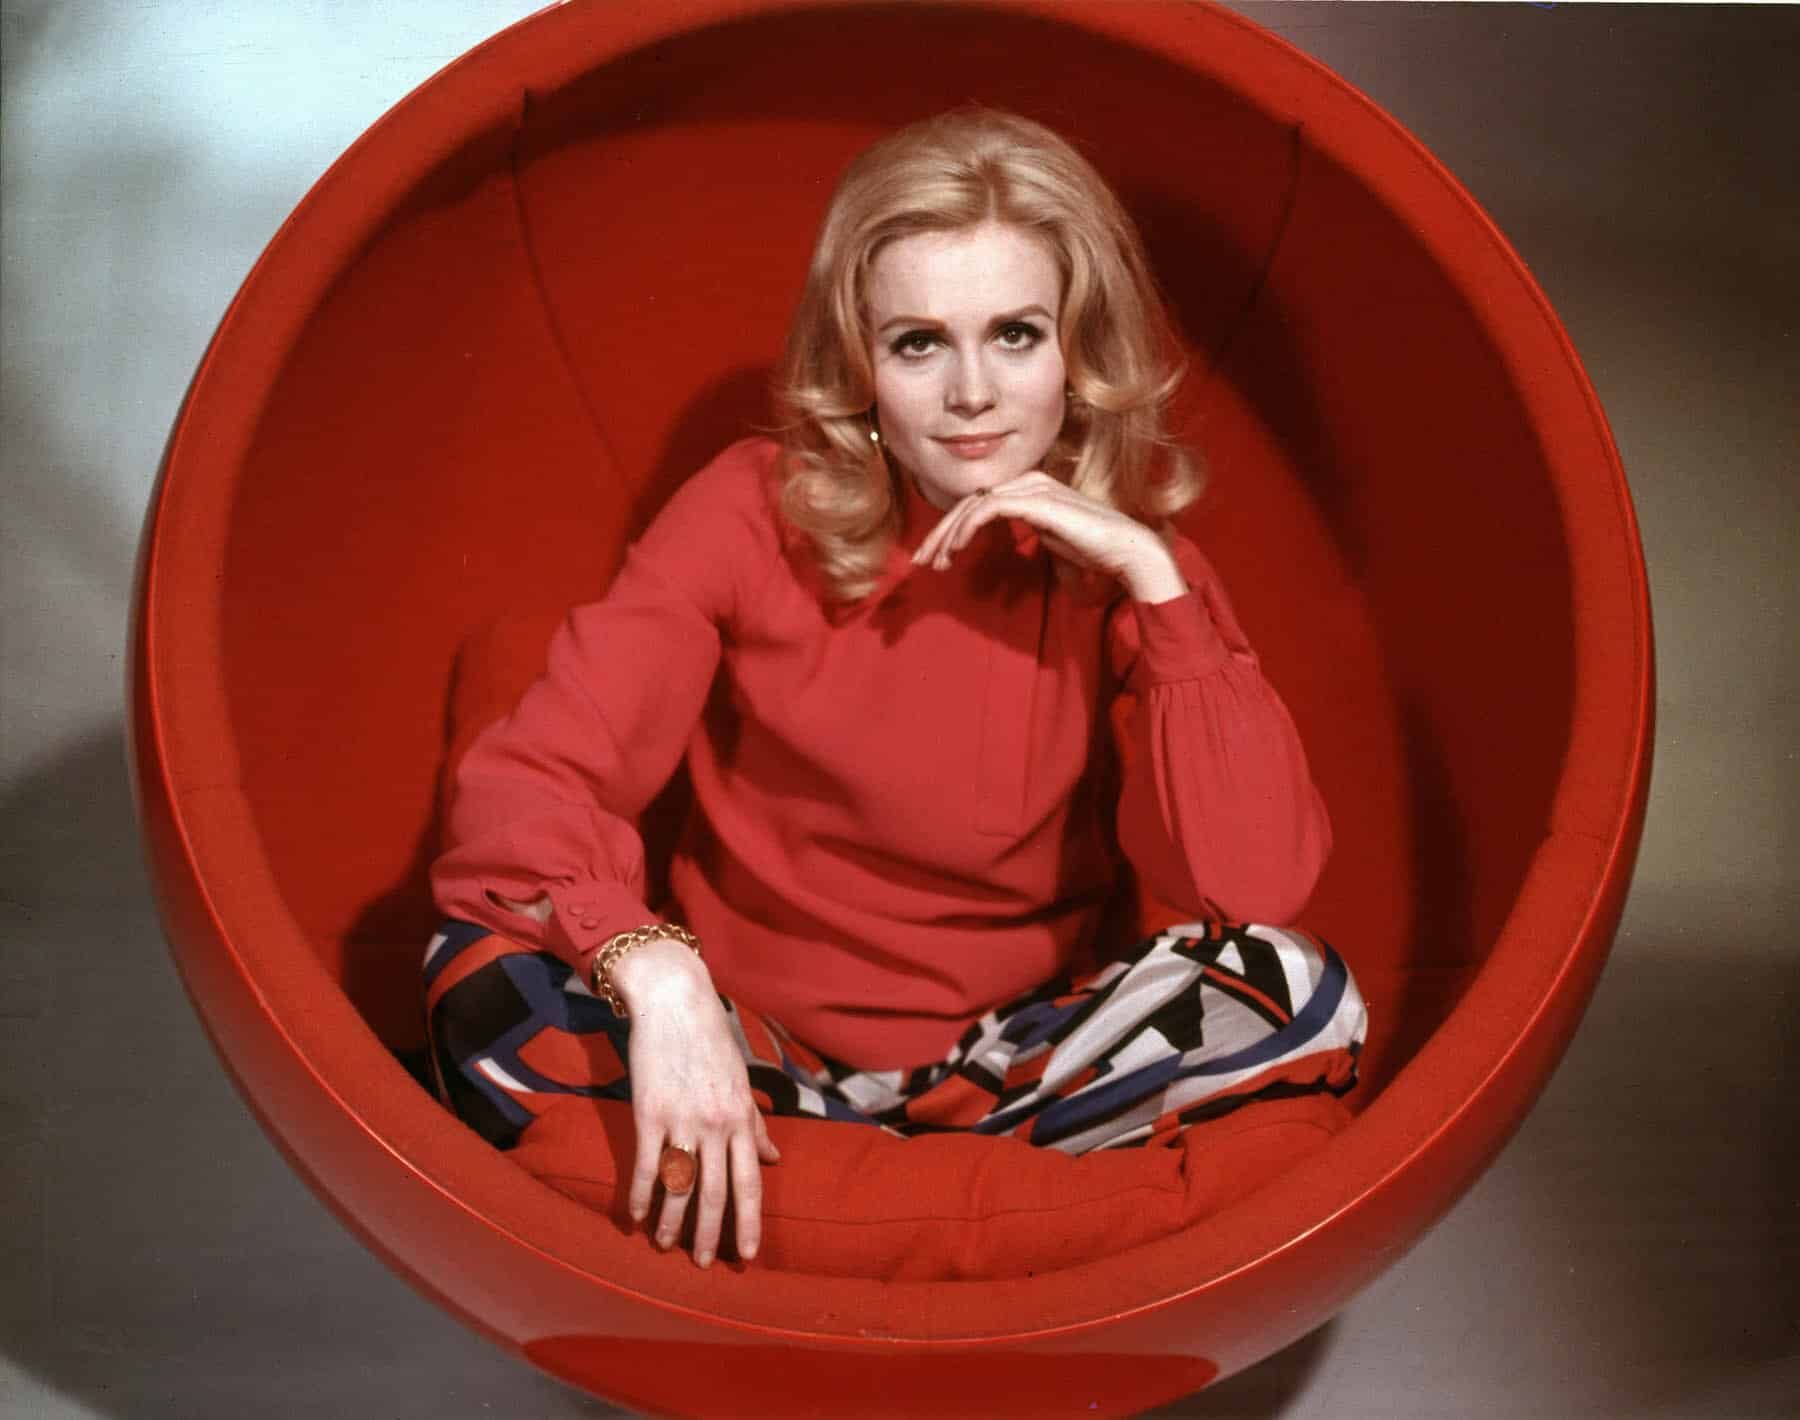 Françoise Dorléac in Eero Aarnio's Ball chair for the film Billion Dollar Brain